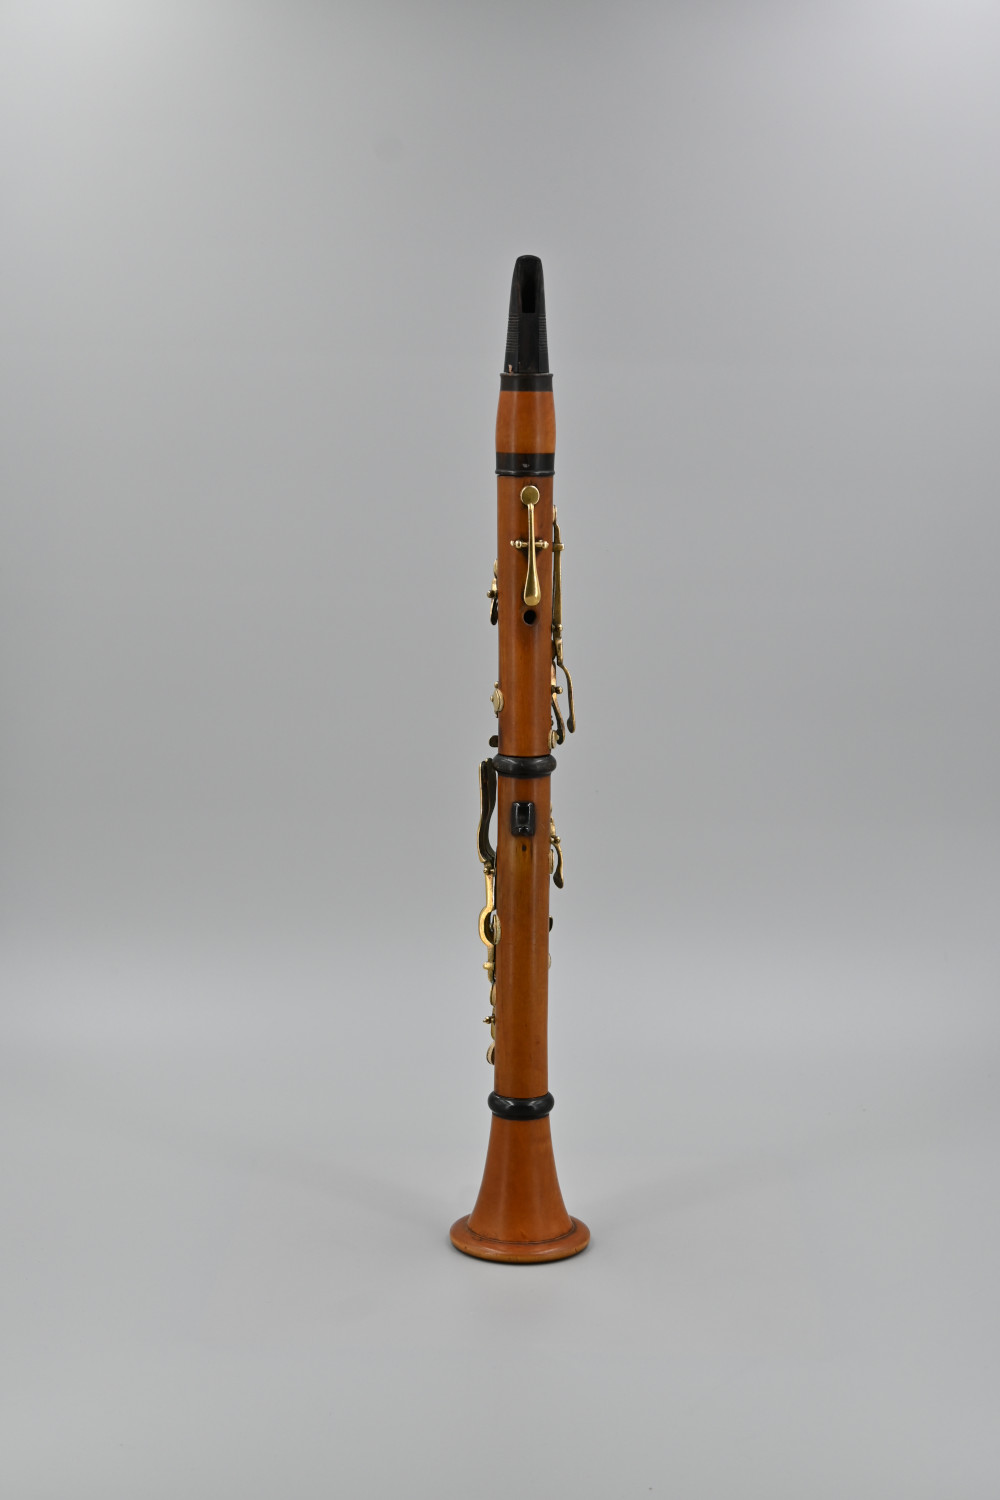 Adler-D-clarinet-VM-collectables4